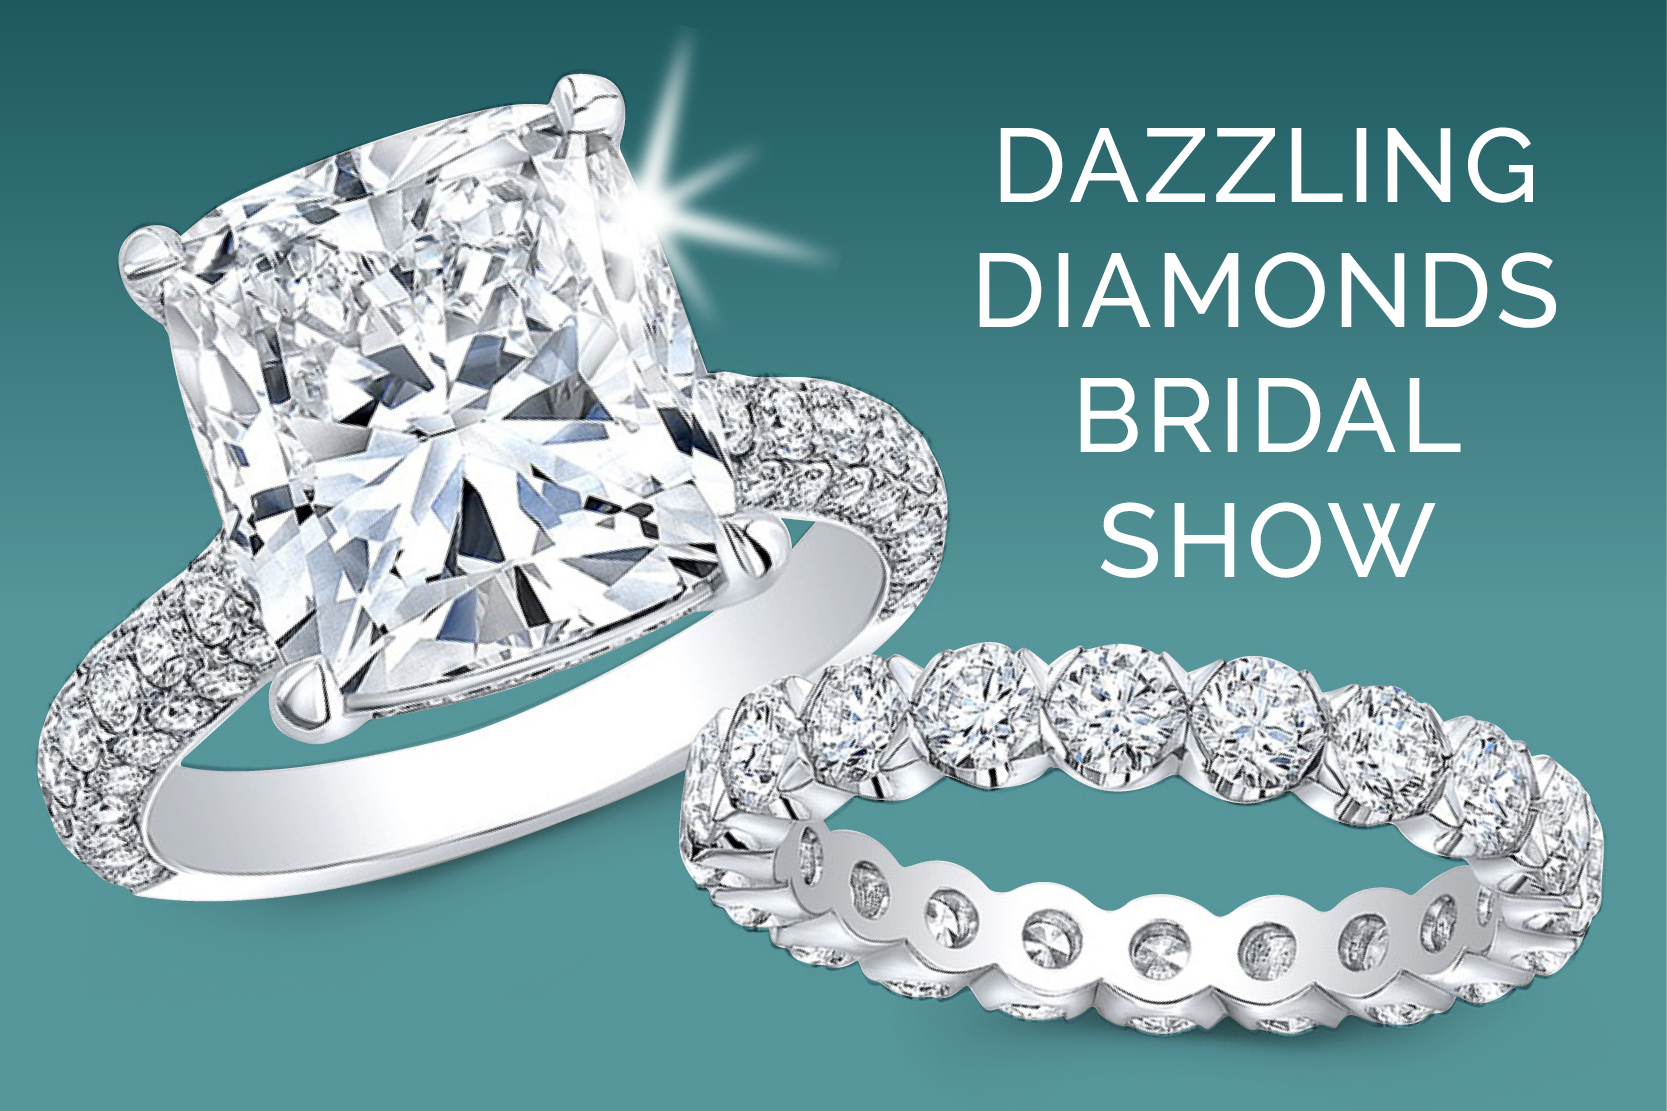 Dazzling Diamonds Bridal Show